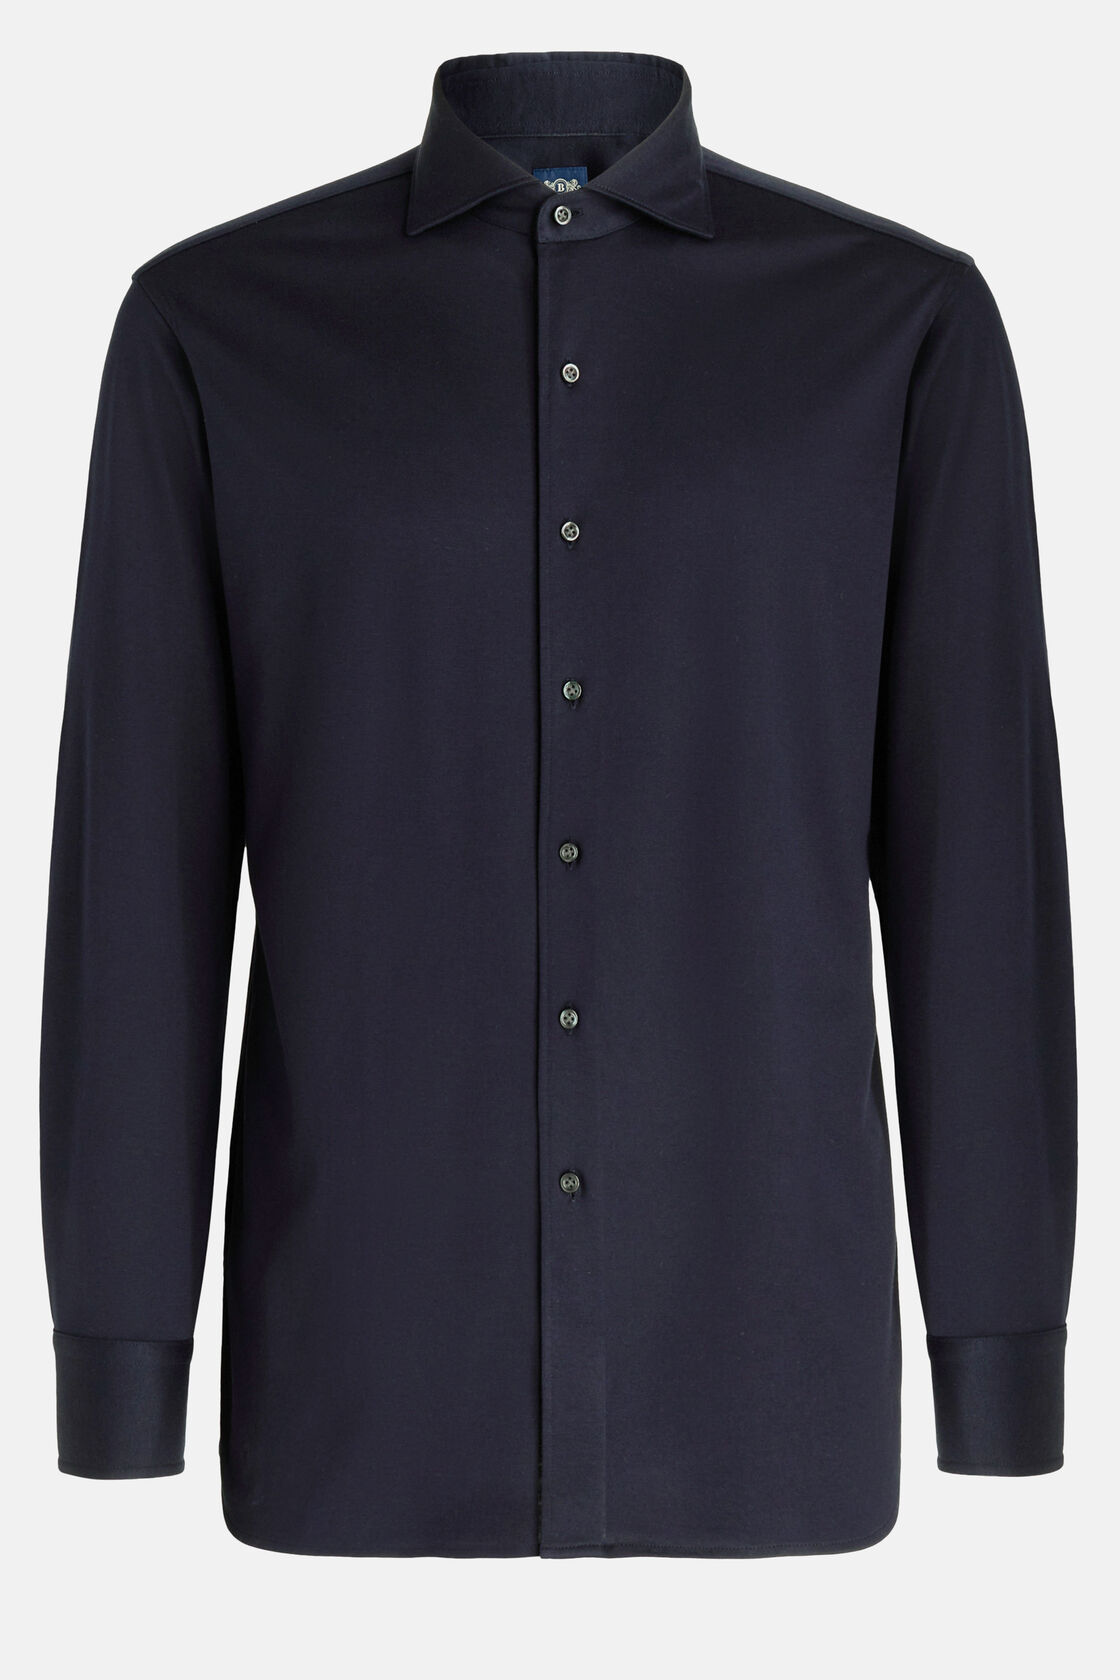 Cotton Jersey Slim Fit Polo Shirt, Navy blue, hi-res